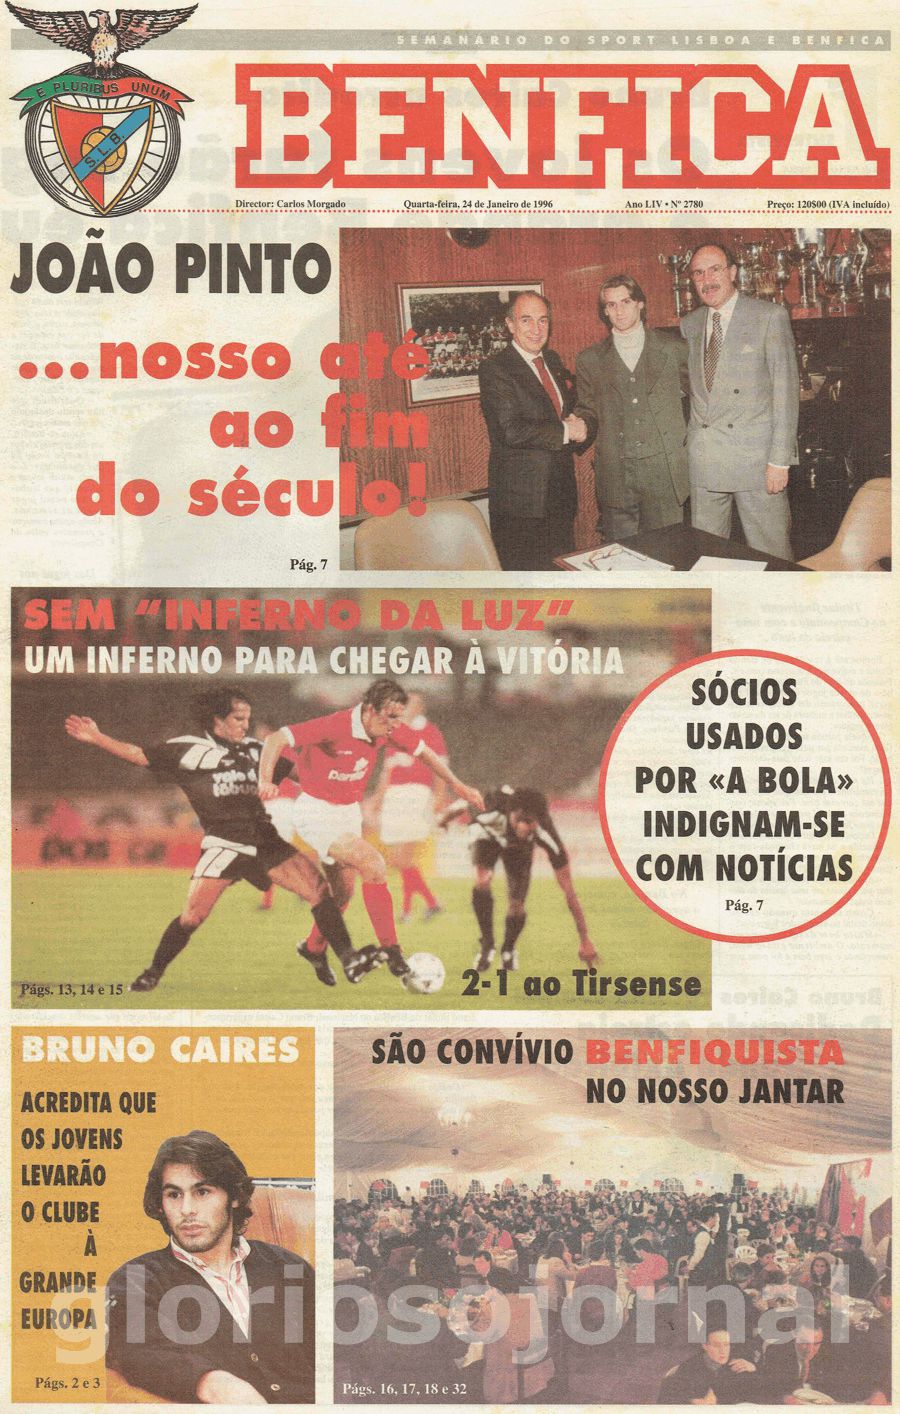 jornal o benfica 2780 1996-01-24